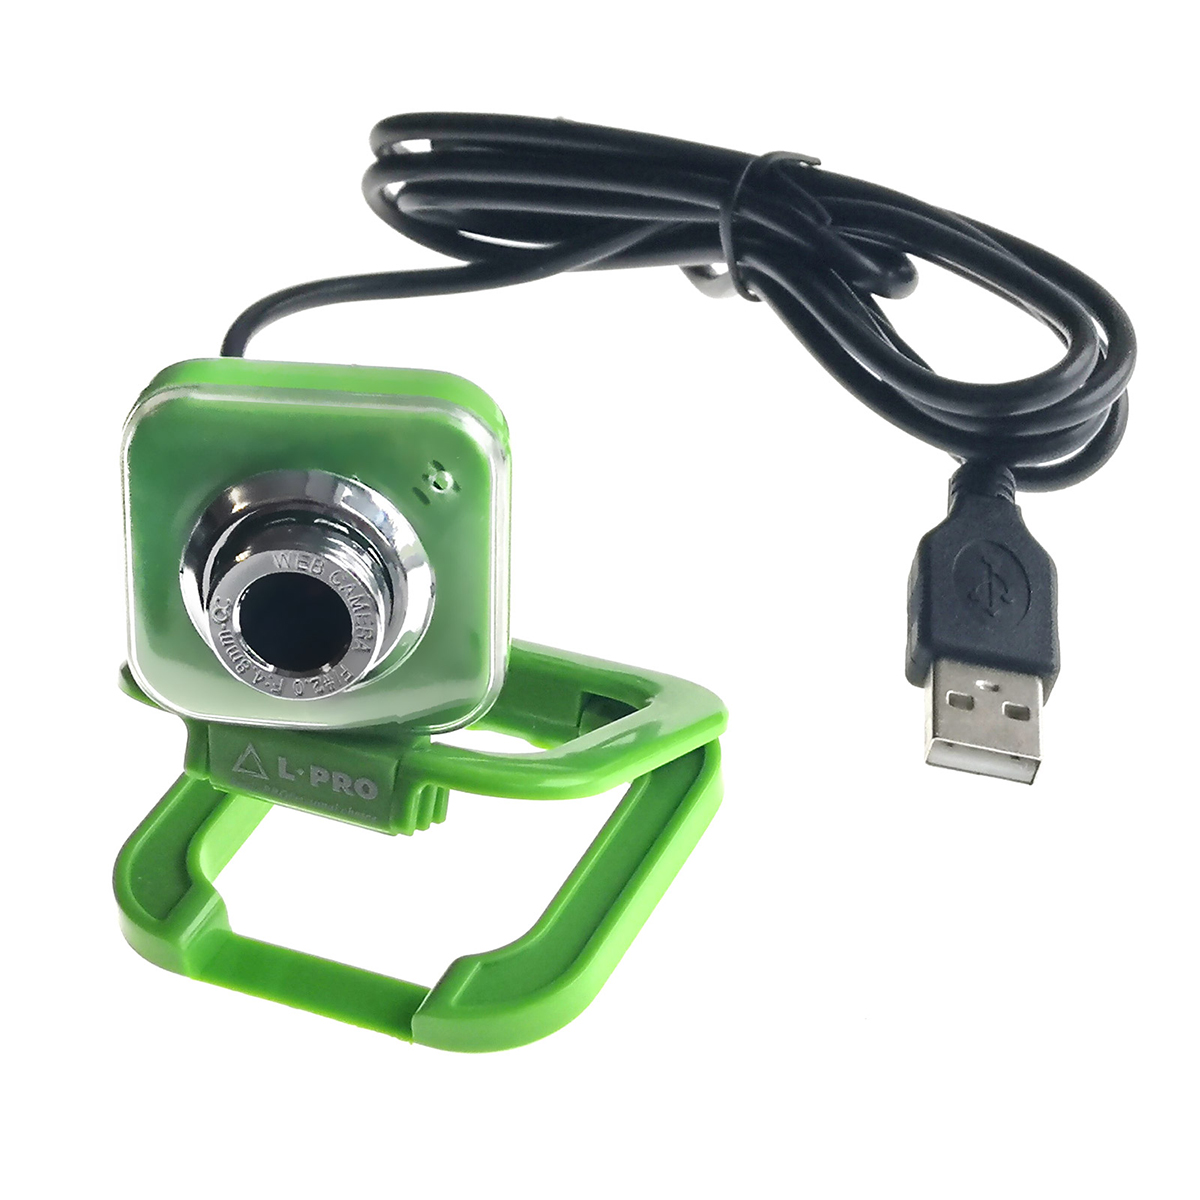 Веб-камера L-PRO 917/1406, CMOS, 640x480, 0.3Мп, USB, цвет зеленый.